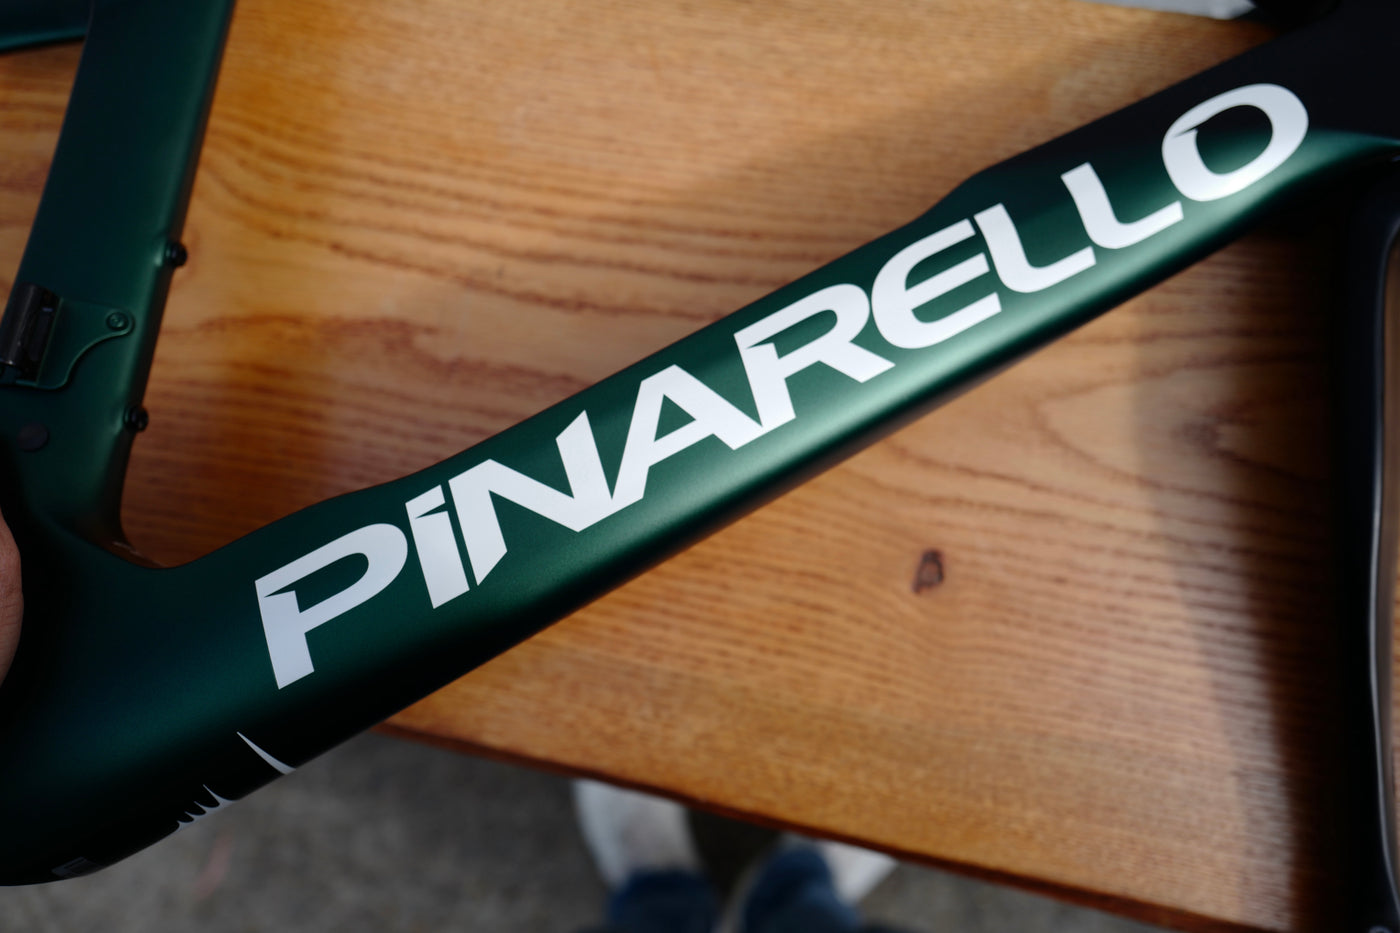 Pinarello Dogma F - Racing Green